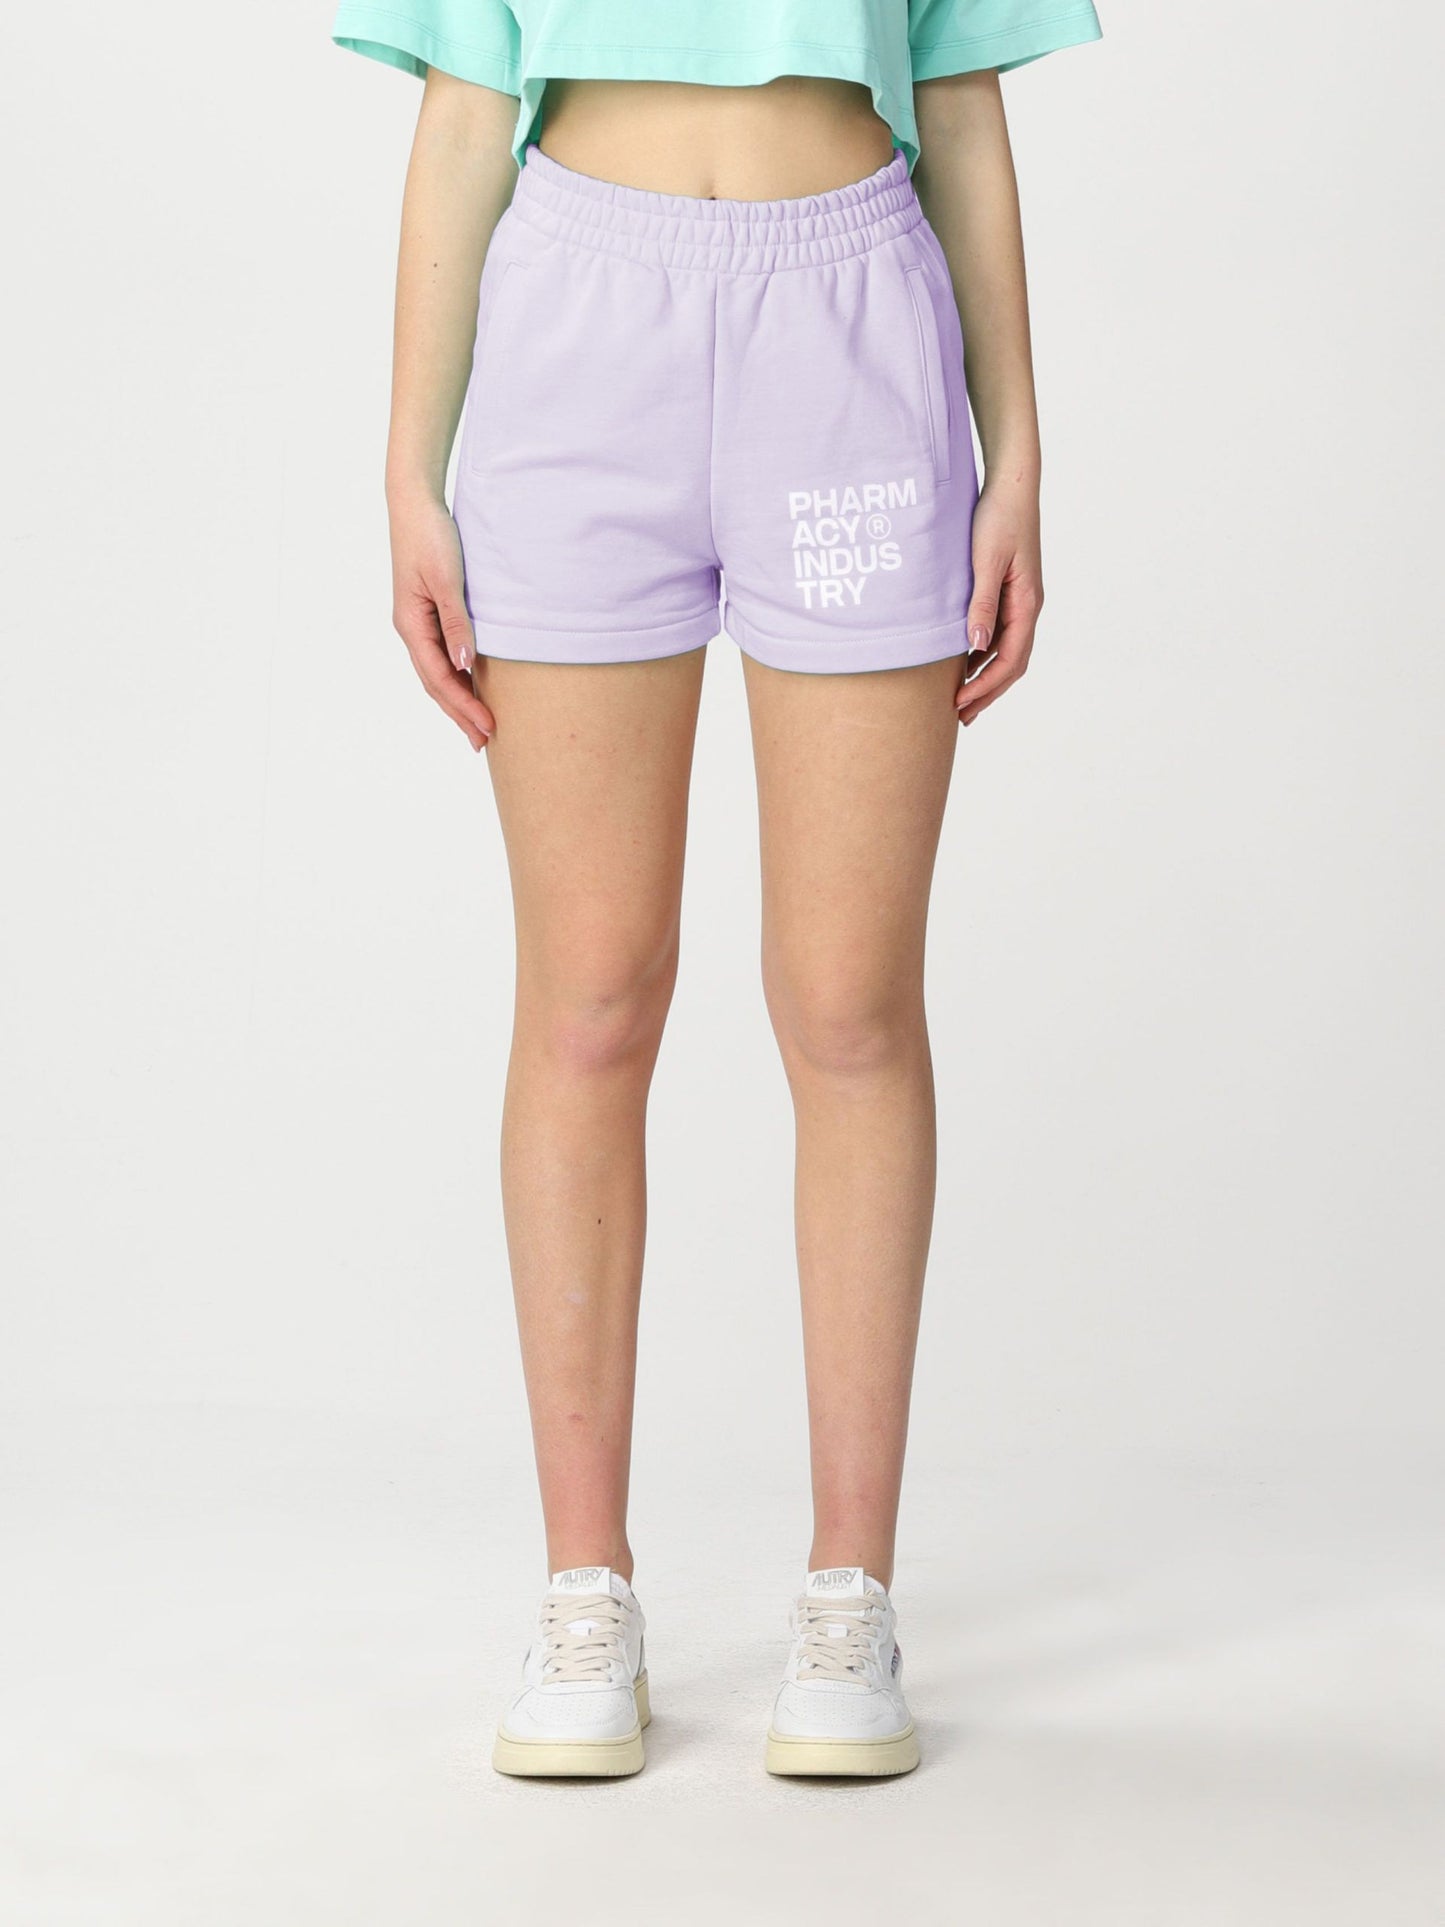 Chic Purple Cotton Shorts